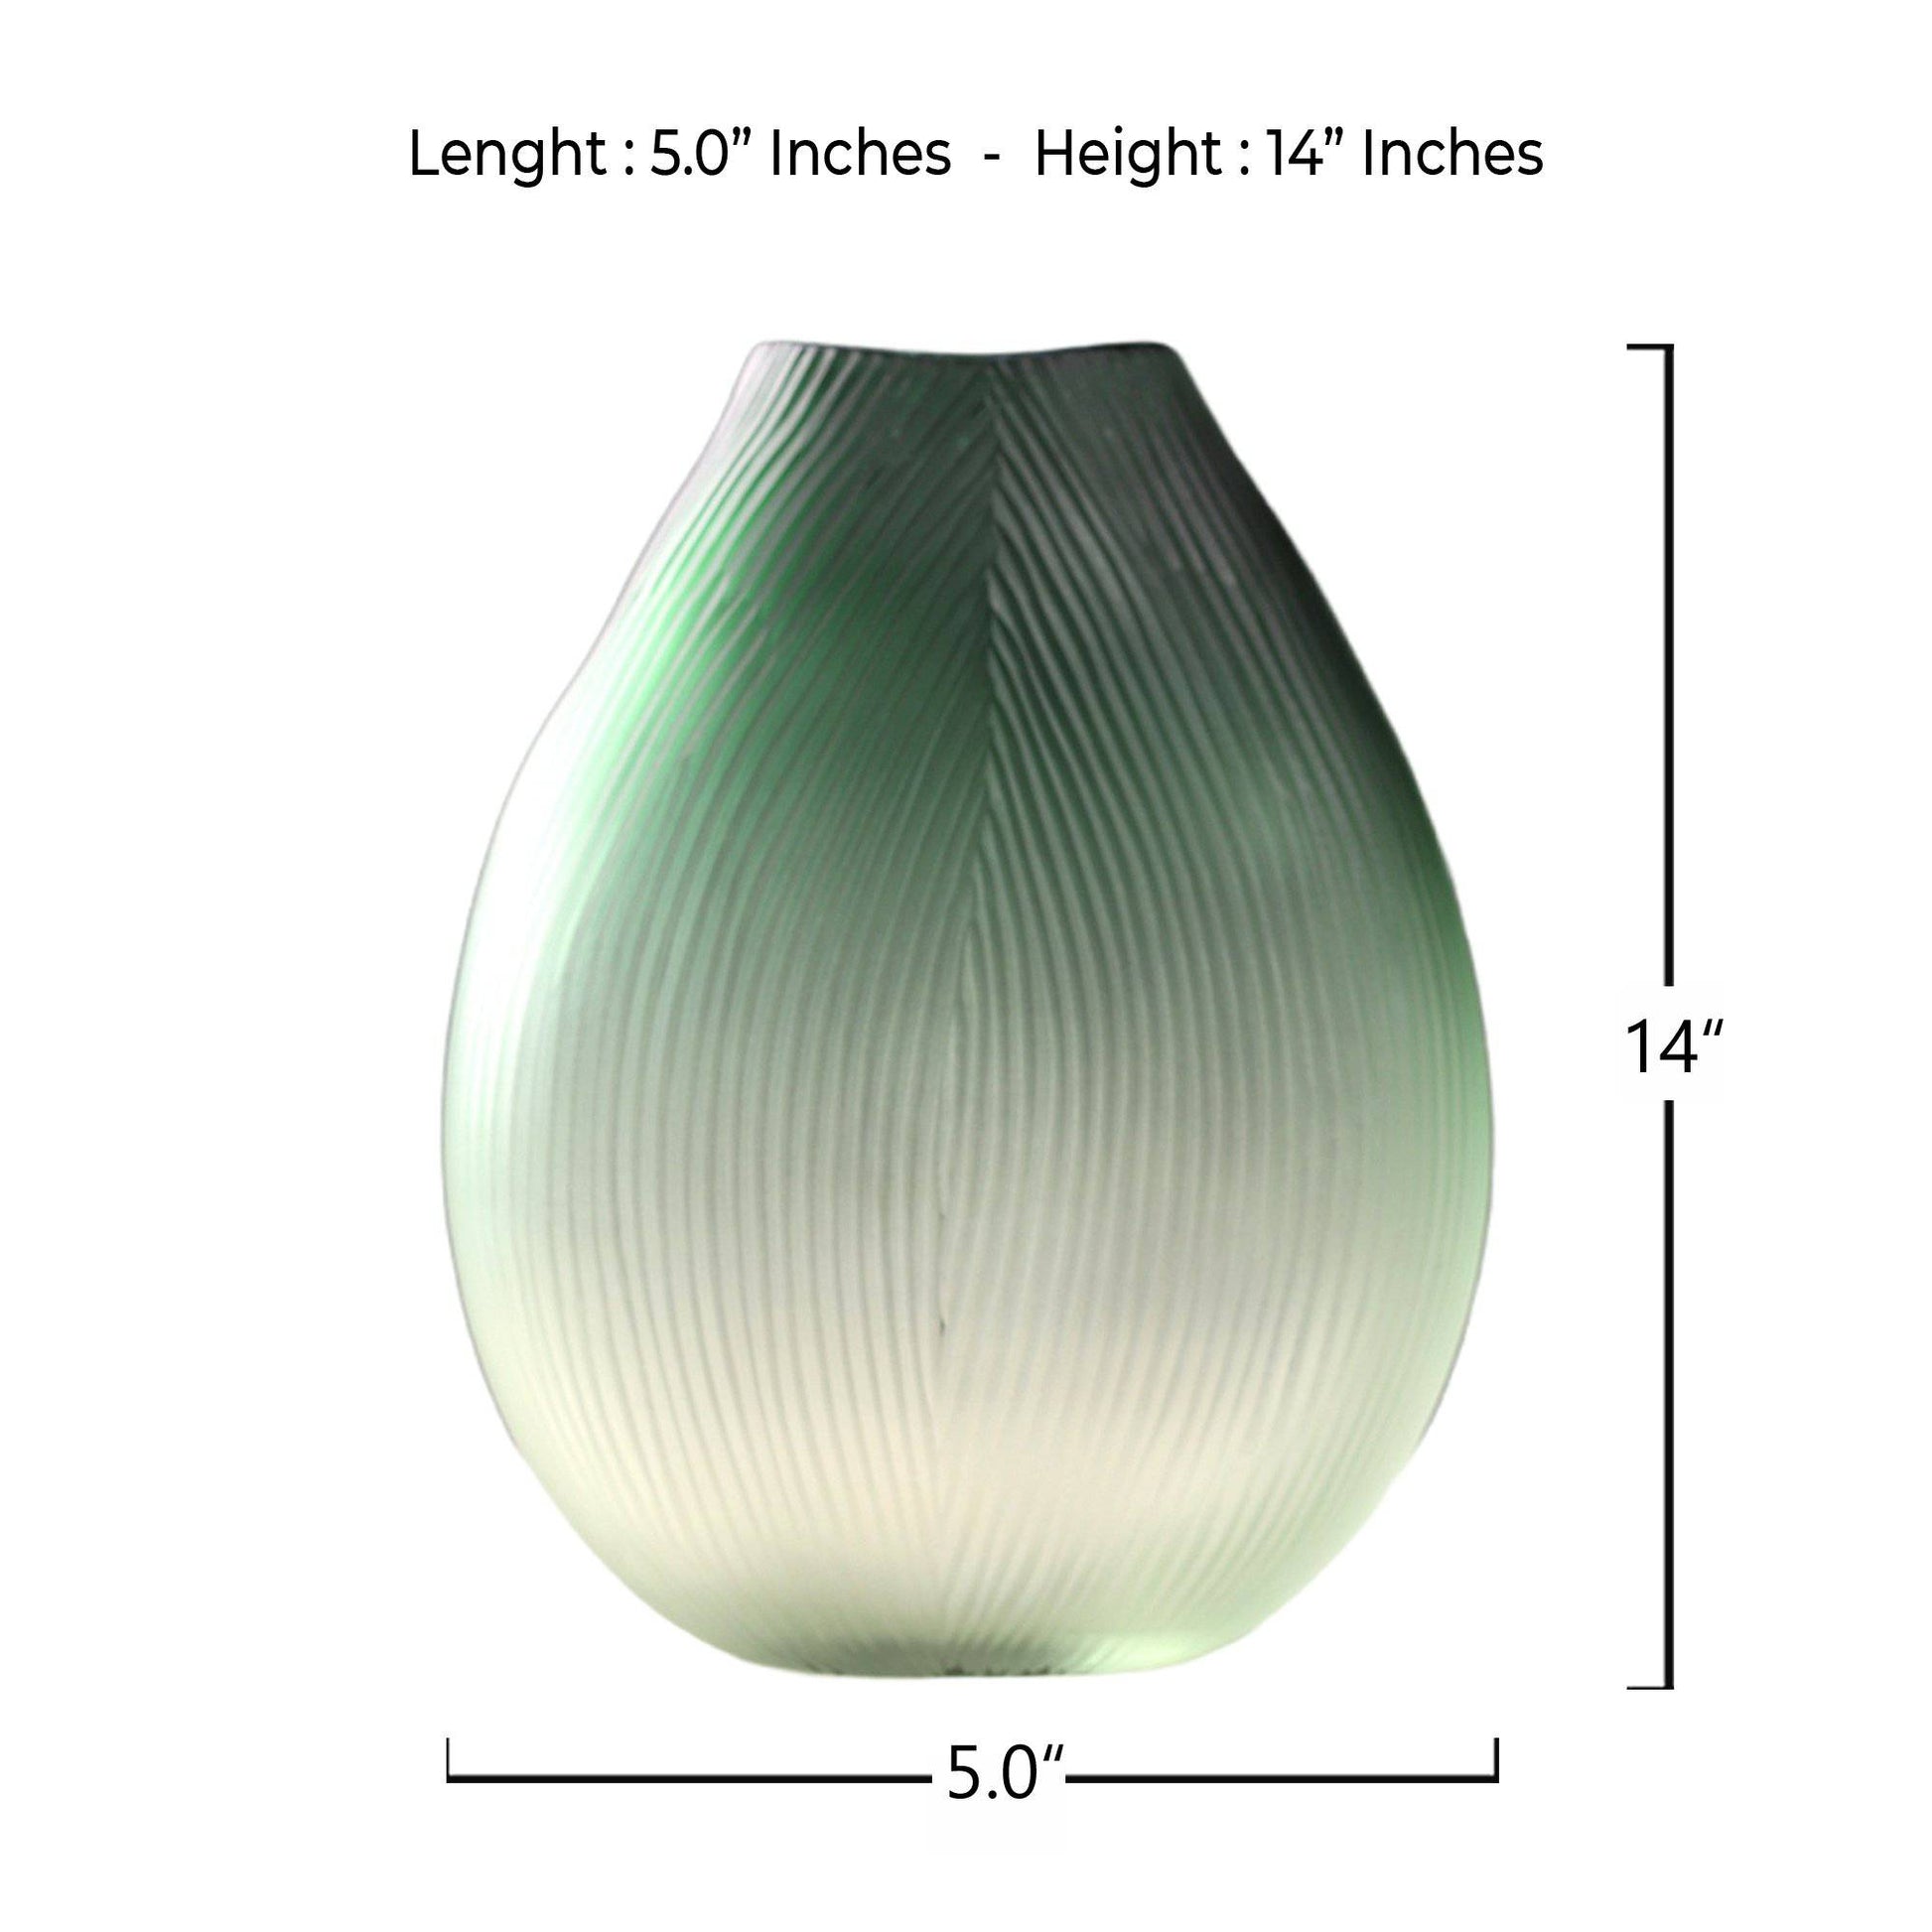 Green Ribbon decorative glass vase - The Decor Circle